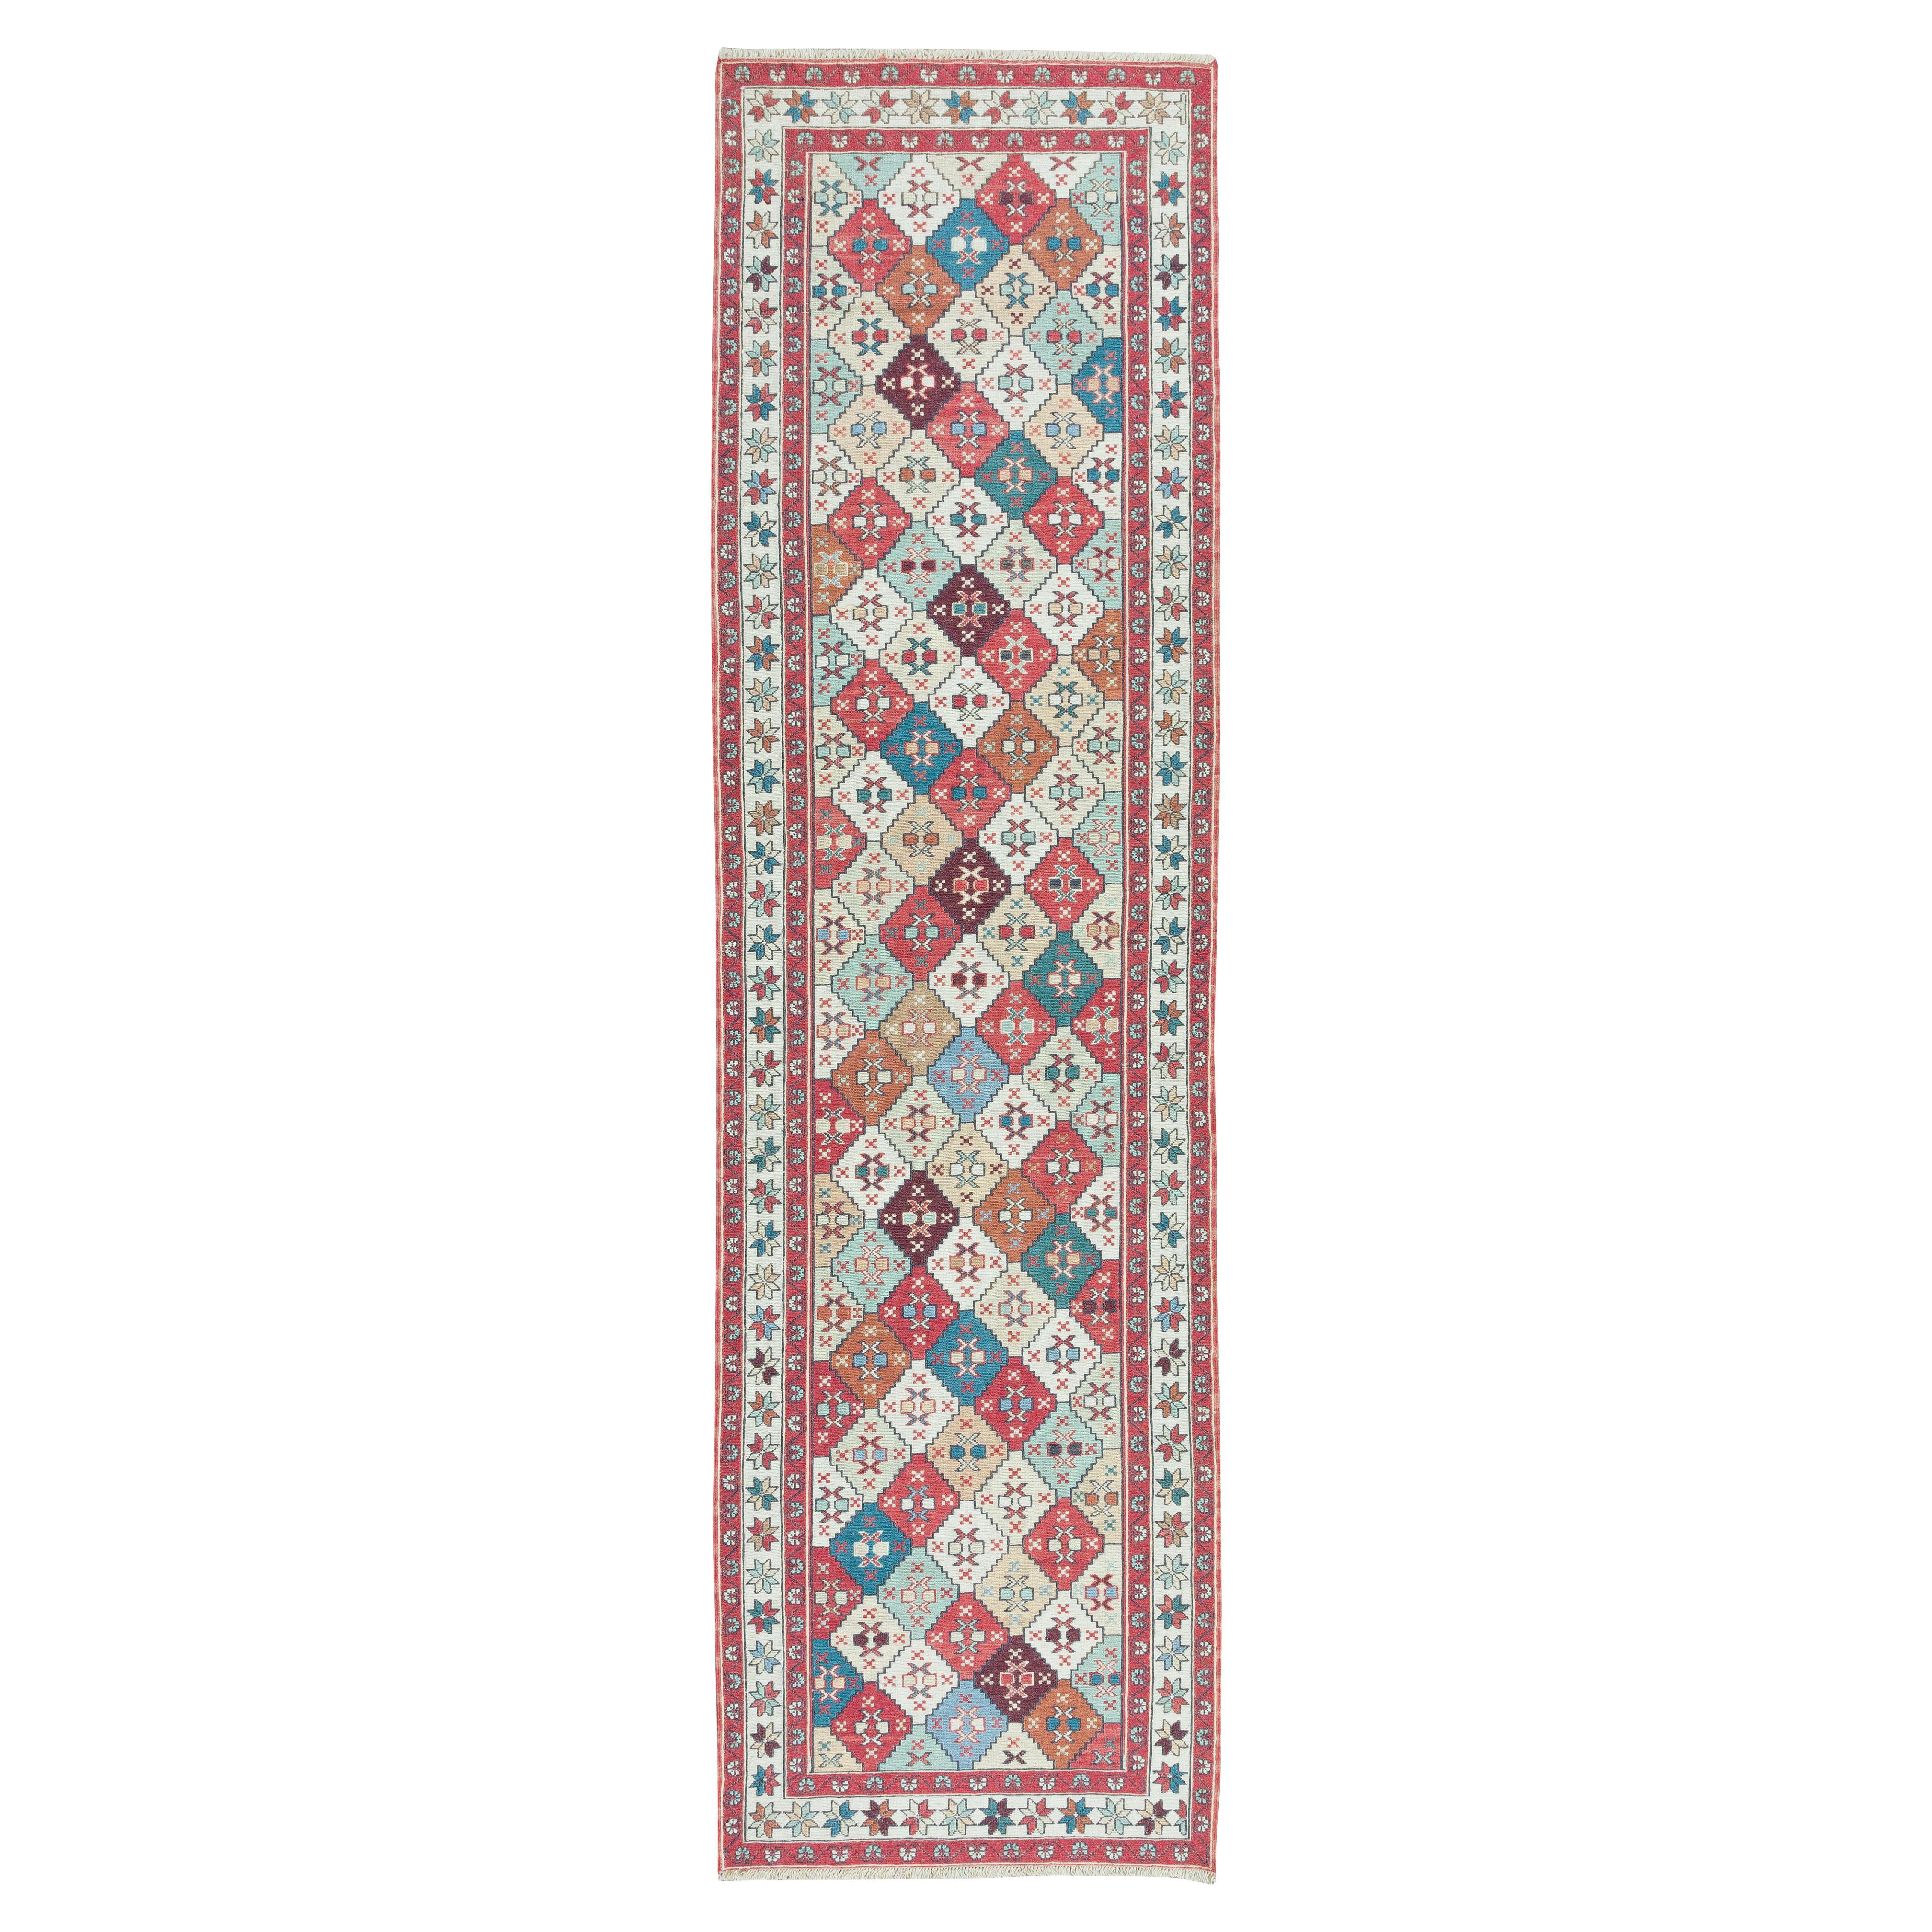 2.6x9.3 Ft Hallway Runner Rug from Turkey, 20th Century Handmade Corridor Carpet For Sale